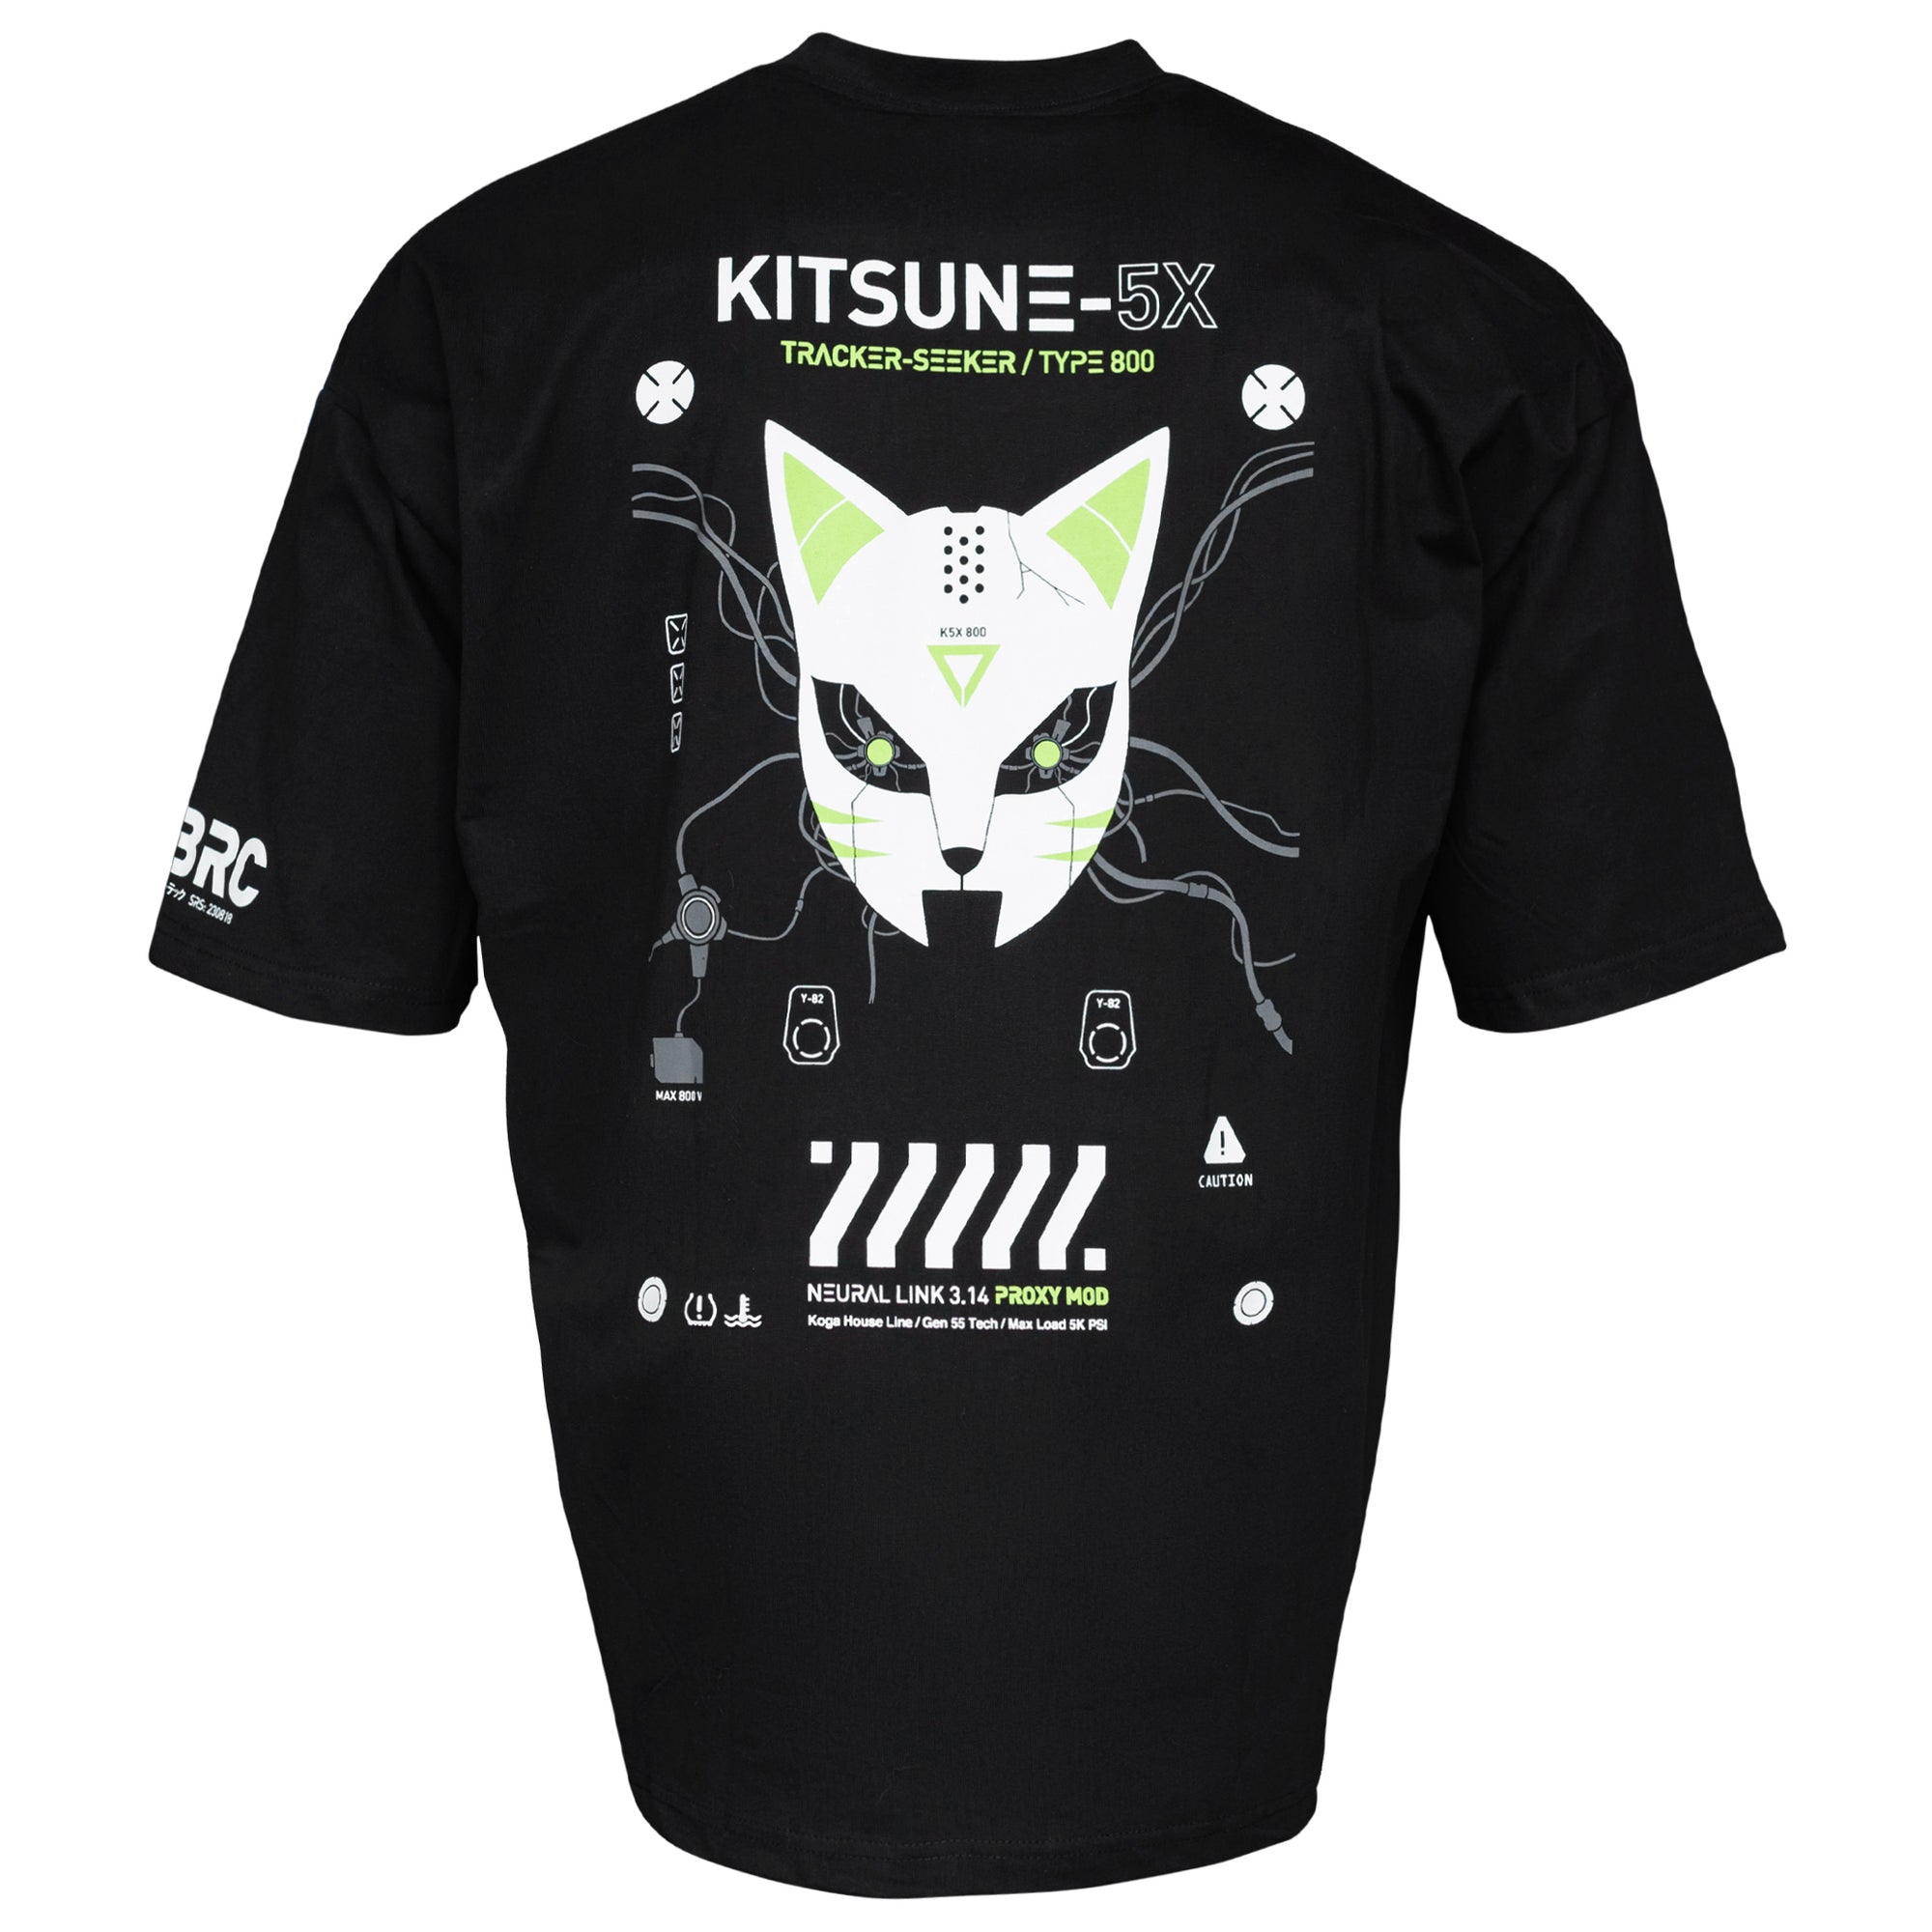 Kitsune-5X Black Oversized Short Sleeve T